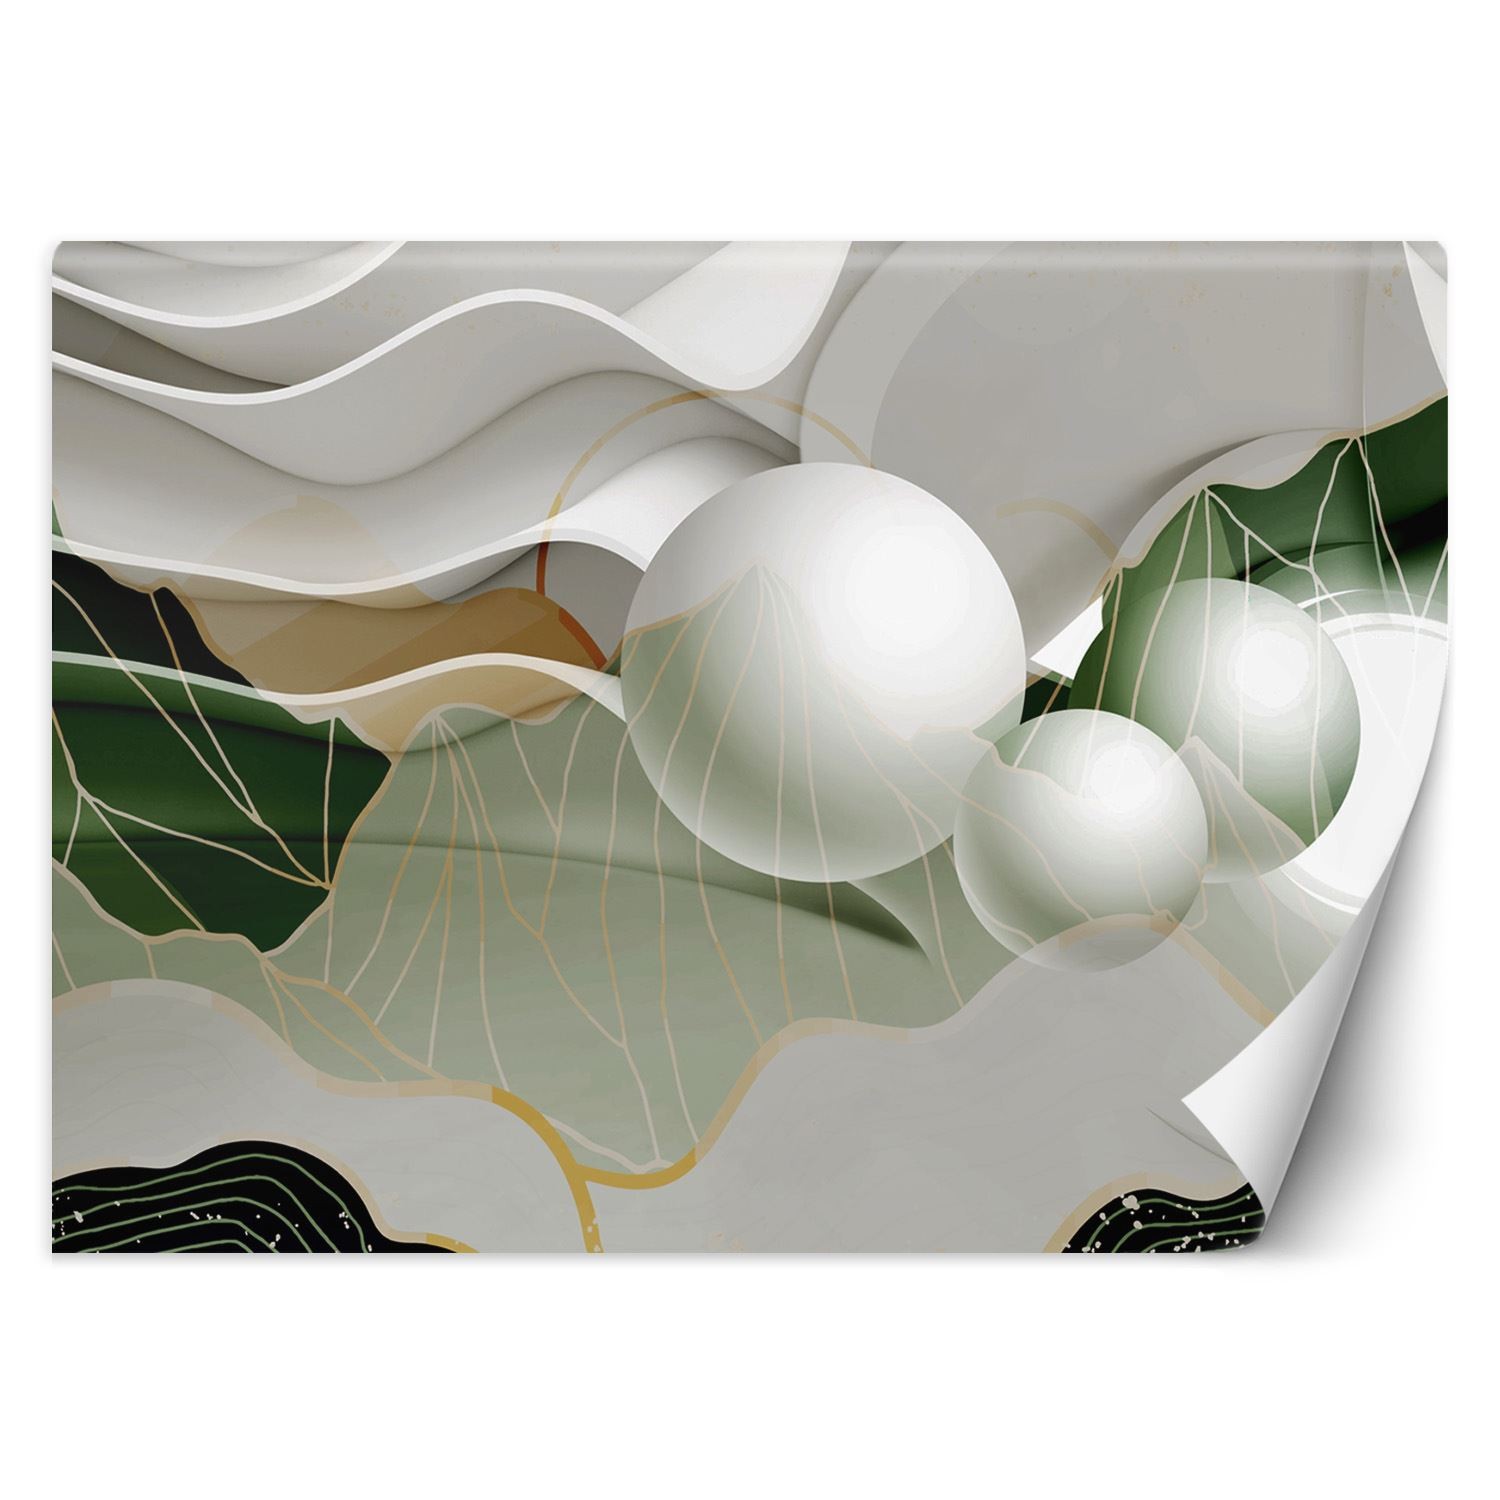 Trend24 – Behang – Abstracte Golven – Vliesbehang – Behang Woonkamer – Fotobehang – 450x315x2 cm – Incl. behanglijm